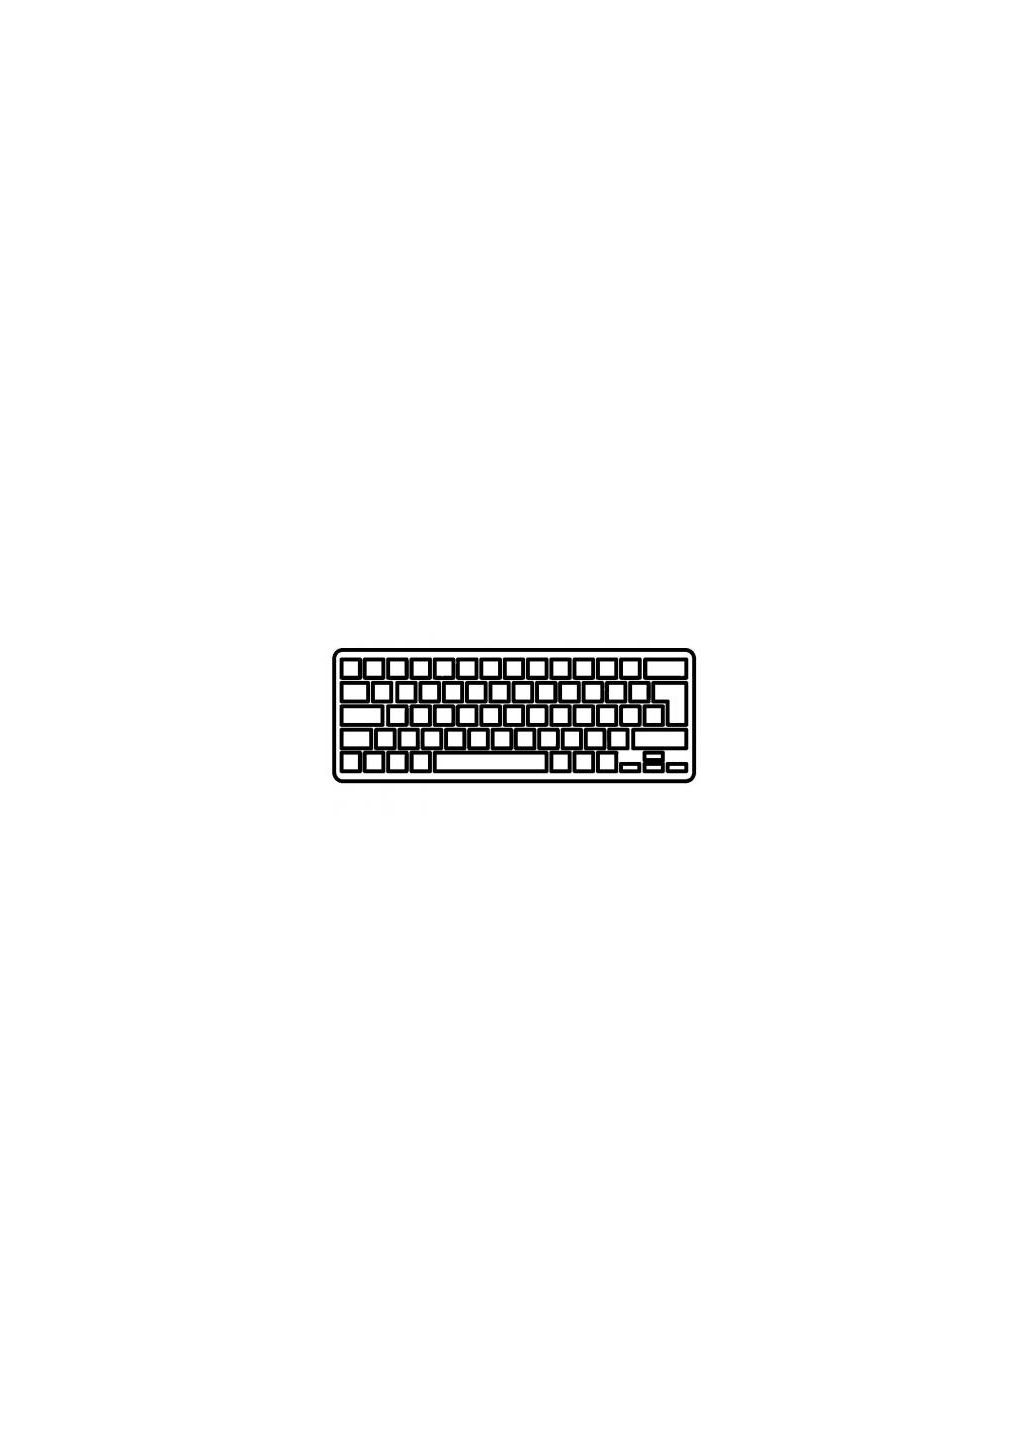 Клавиатура для ноутбука UA (A43704) Acer lt21/lt28 aspire one 531/532/532h/d255/d260 черная (276706604)